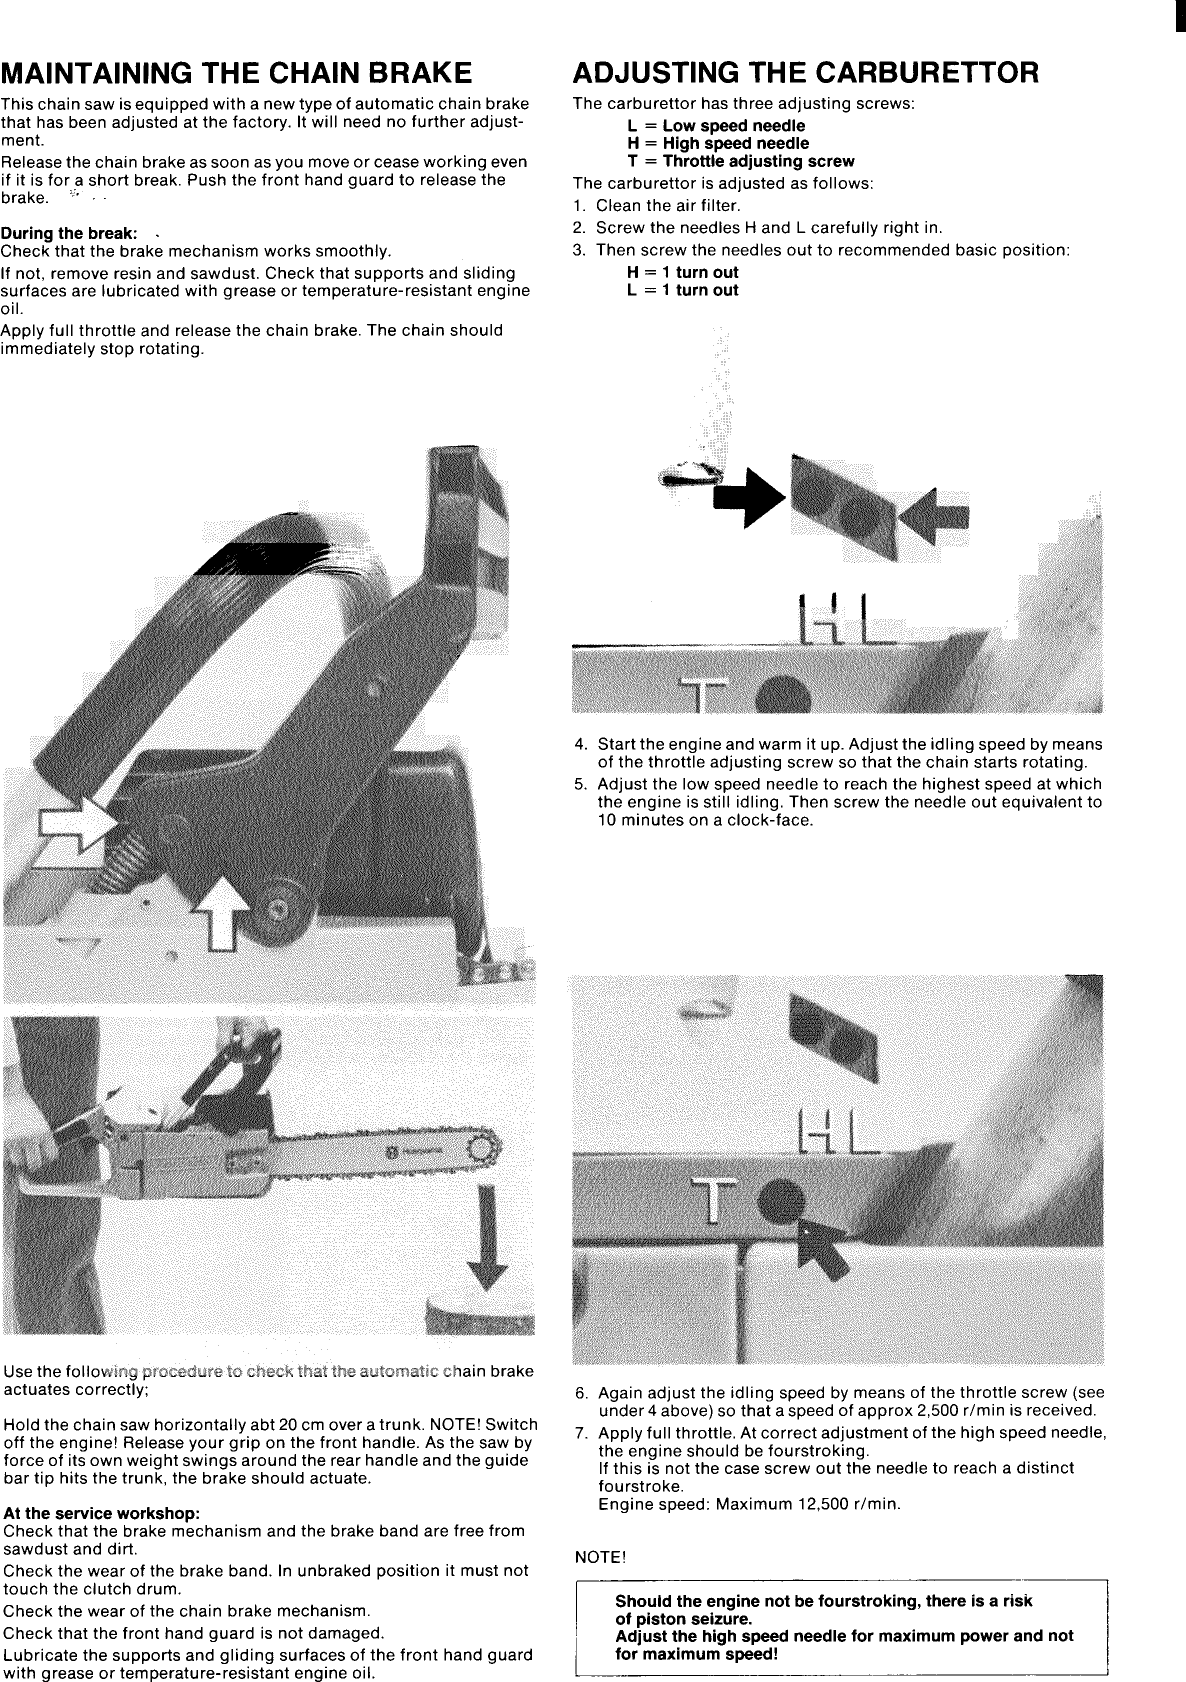 Page 3 of 8 - Husqvarna Husqvarna-50-Rancher-Users-Manual- OM, Rancher 50, 1982-11, Chain Saw  Husqvarna-50-rancher-users-manual